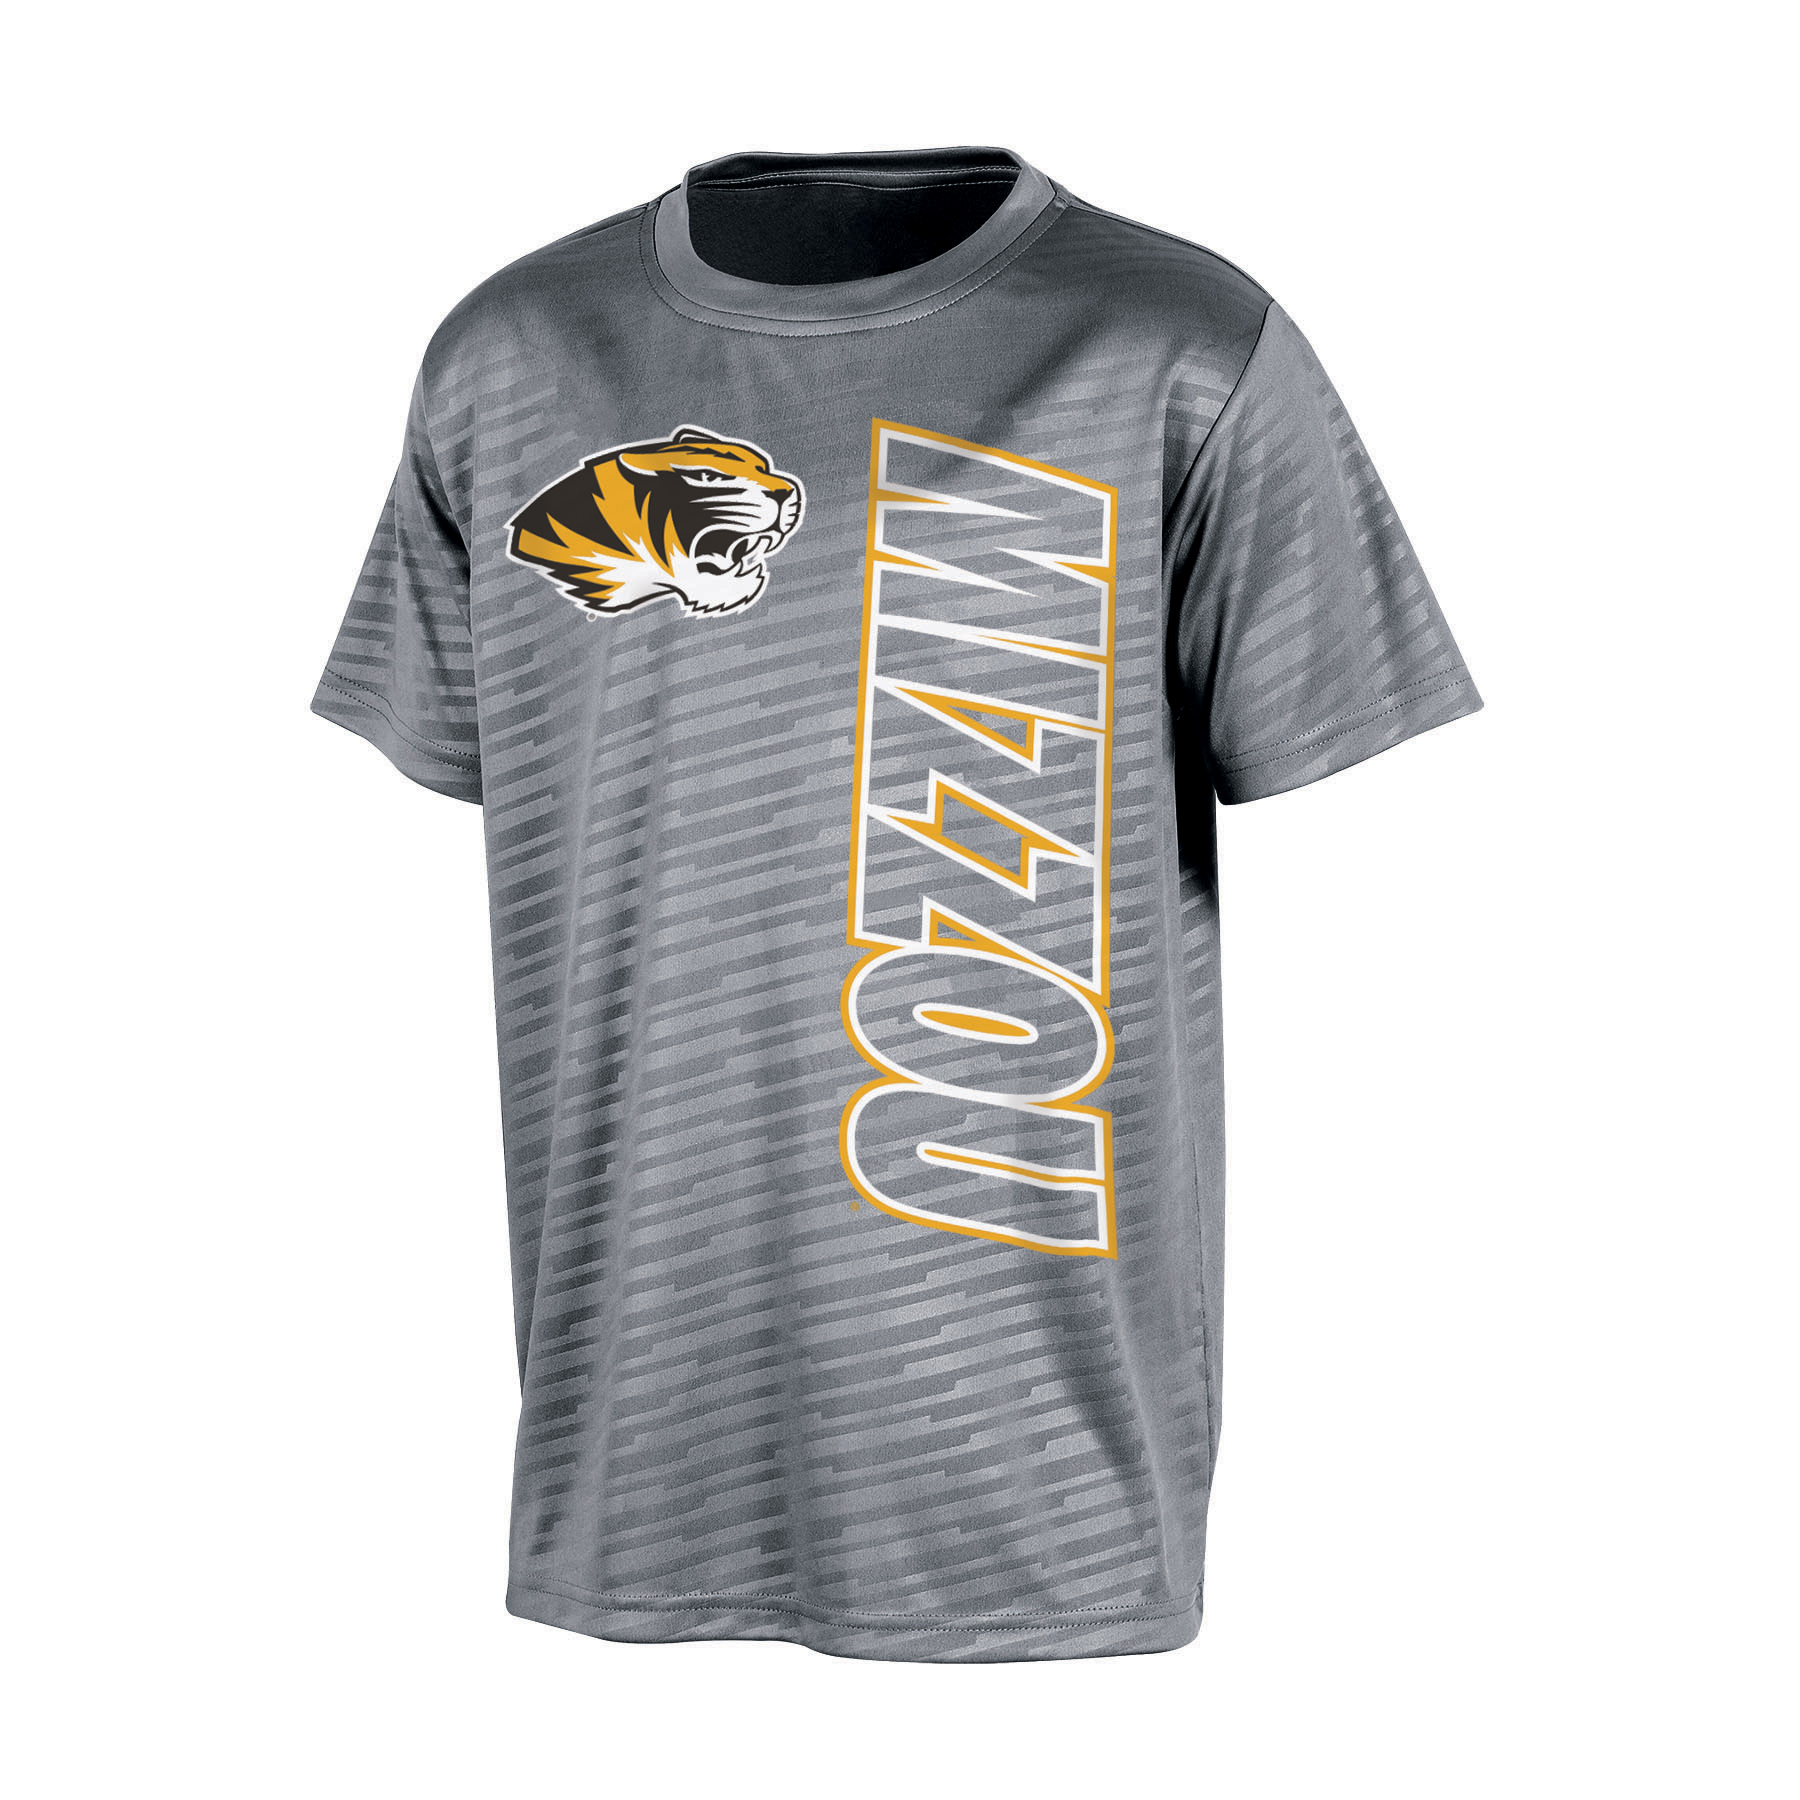 NCAA Boys' Graphic T-Shirt - Missouri Tigers